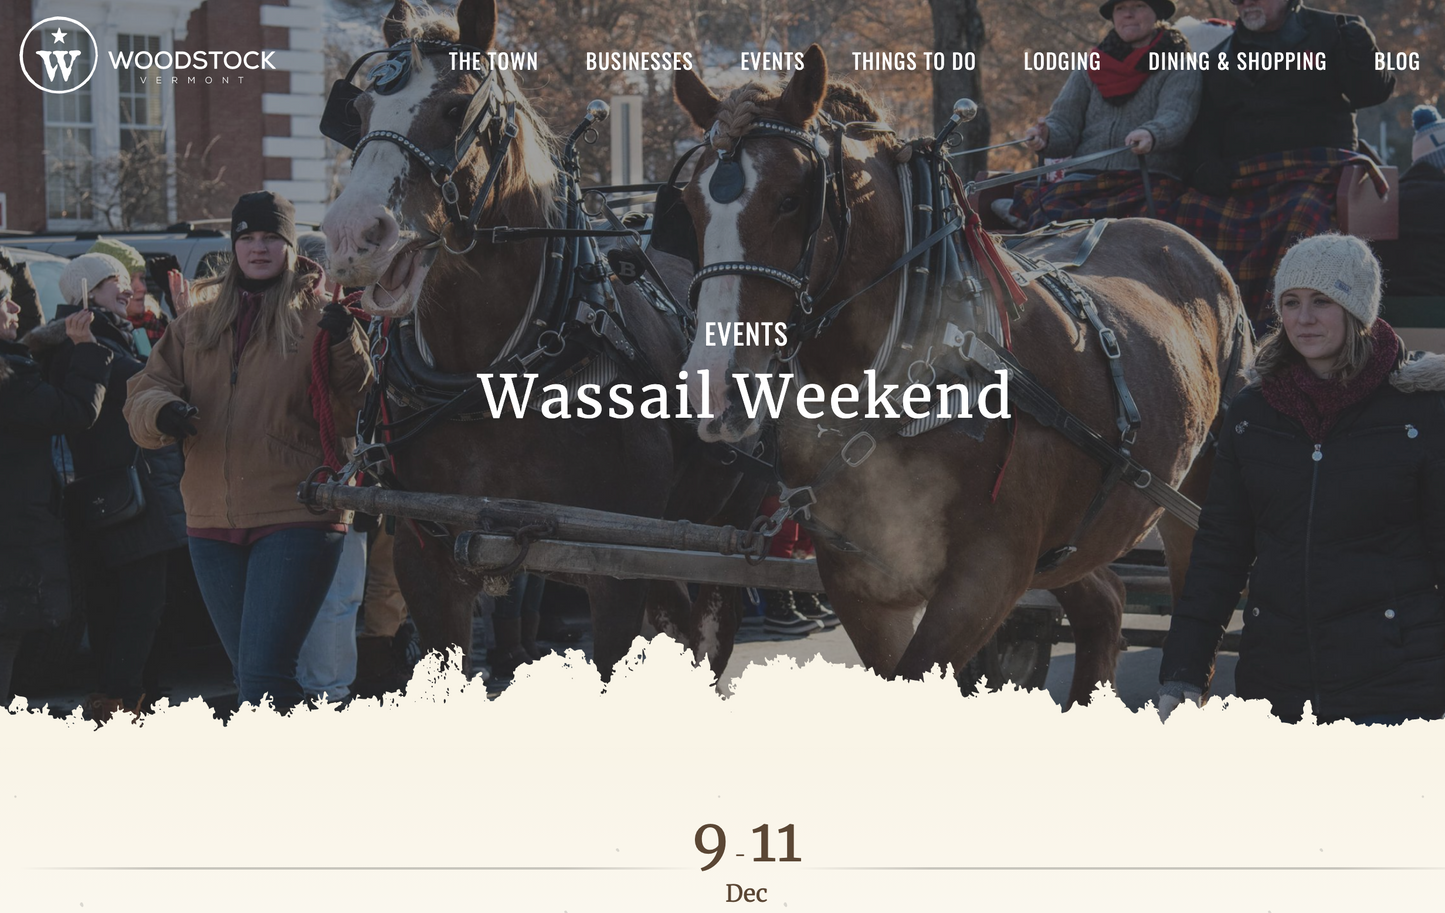 Wassail Weekend Dec 9-11 in Woodstock